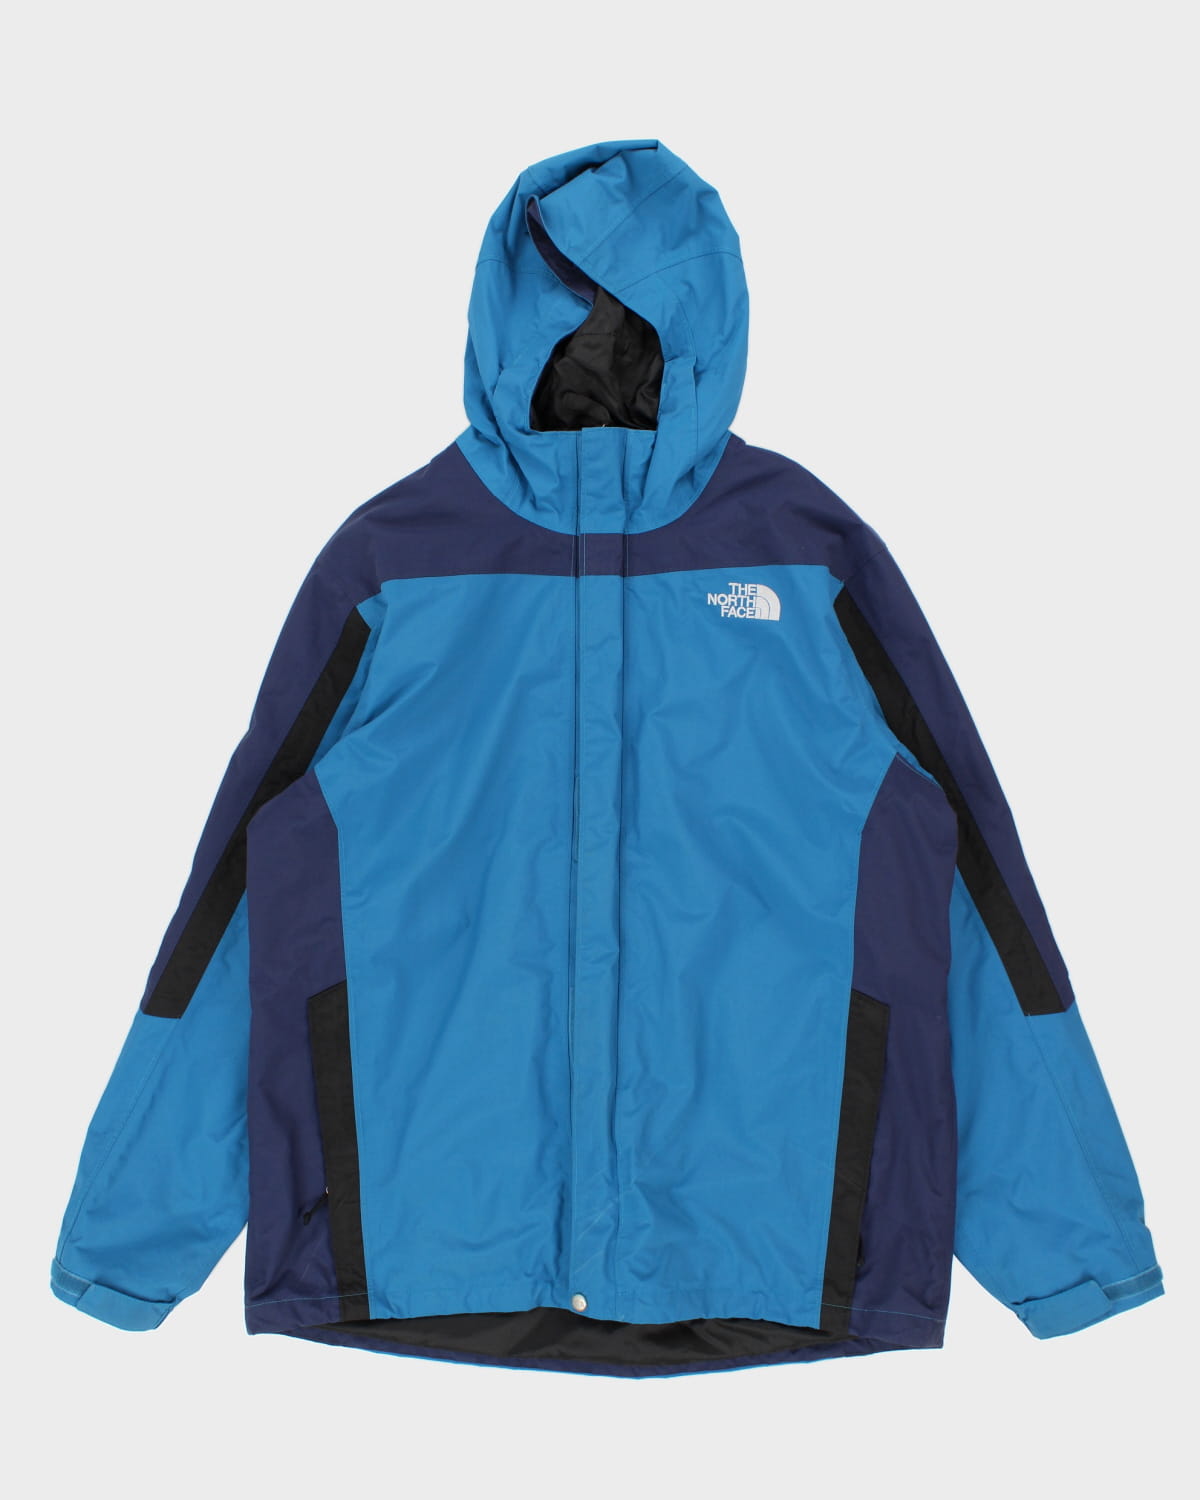 The North Face Blue Rain Jacket - XL